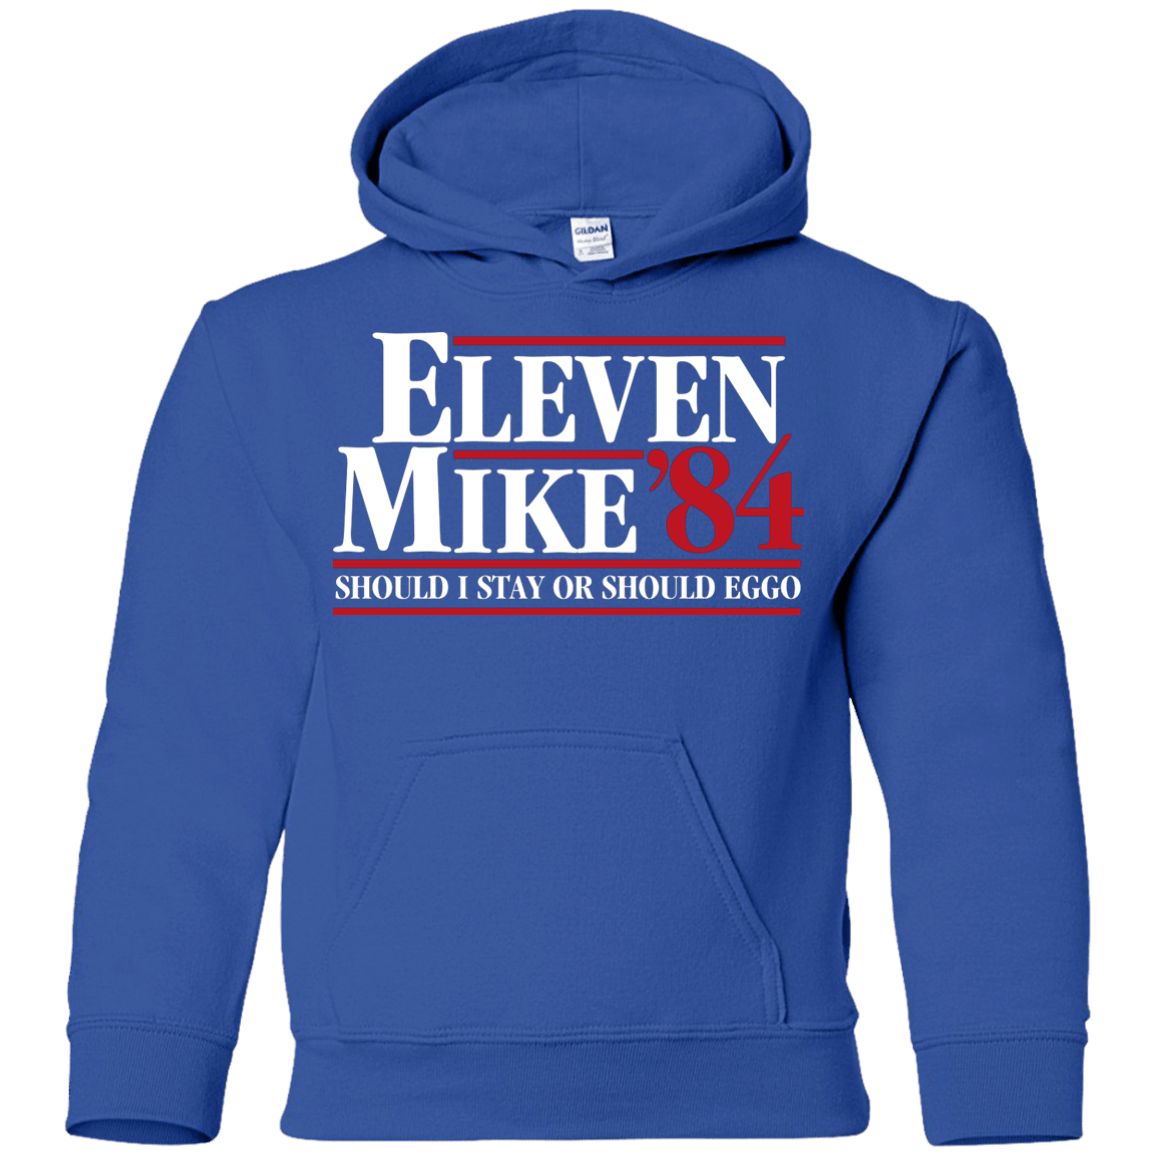 Sweatshirts Royal / YS Eleven Mike 84 - Should I Stay or Should Eggo Youth Hoodie